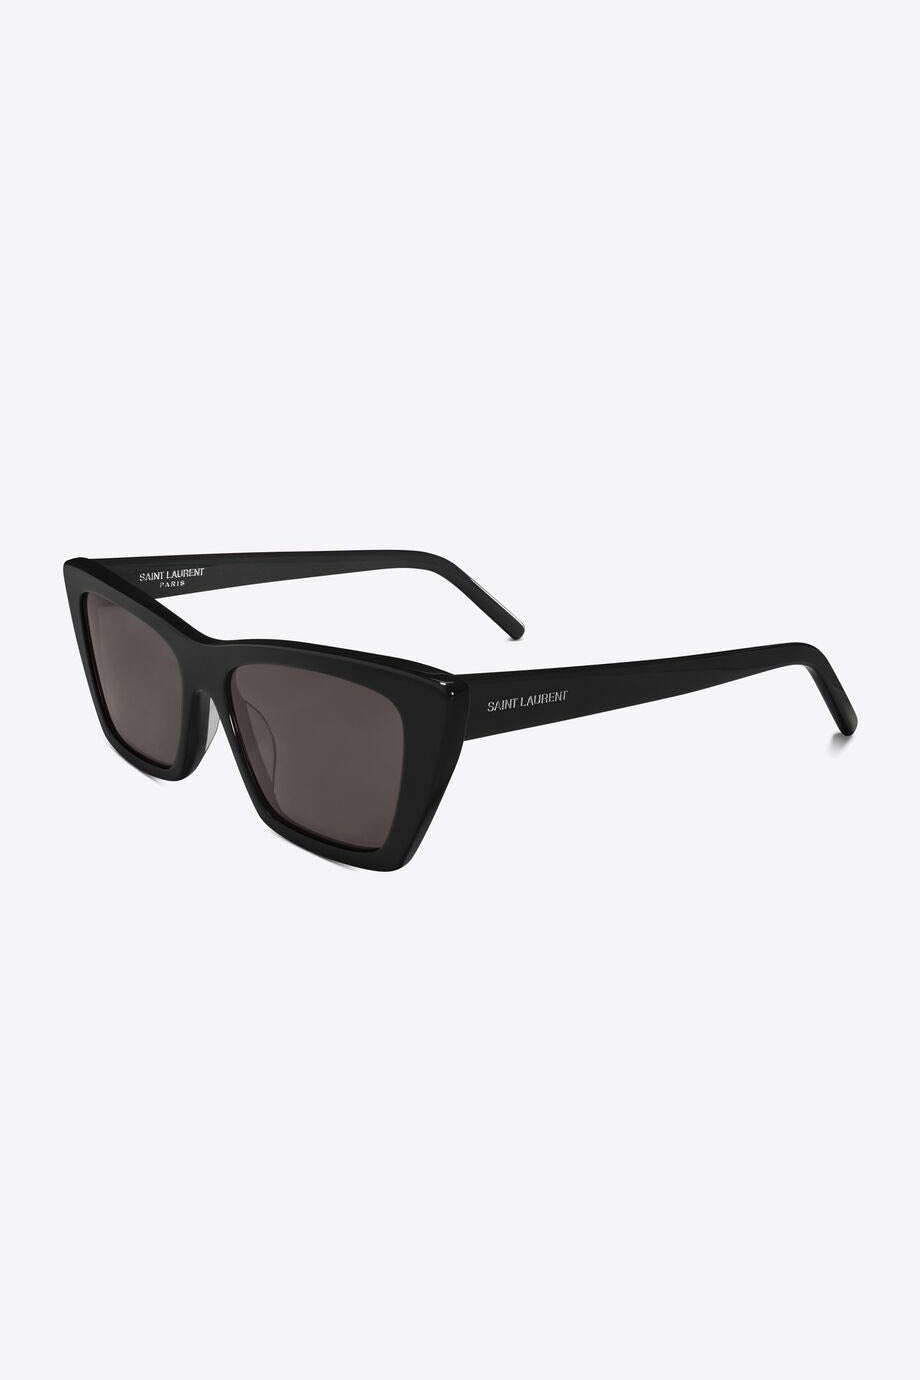 Saint Laurent Sunglasses Black SL 276 MICA 032